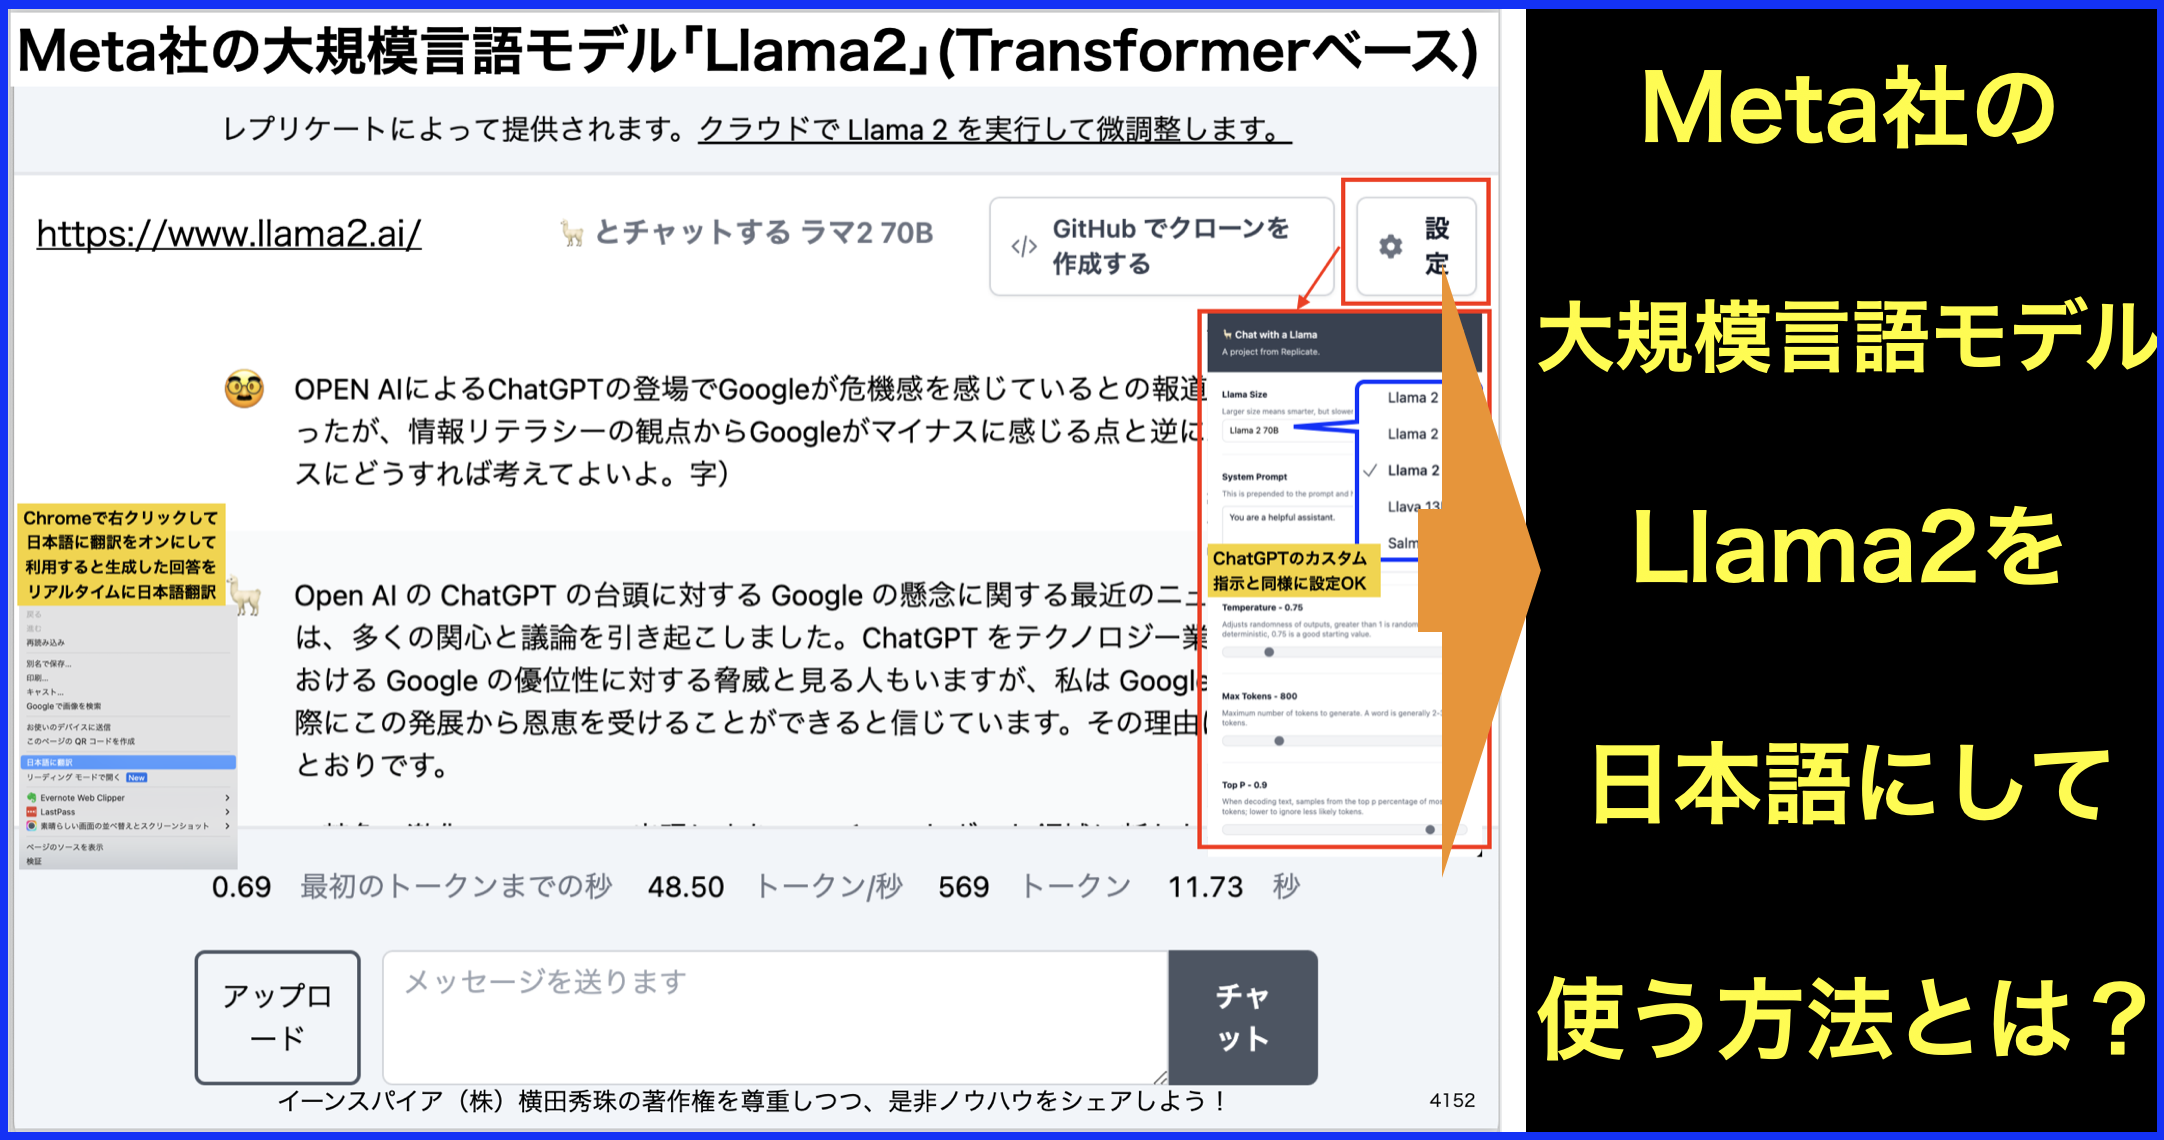 Metaの生成AI大規模言語モデル｢Llama2｣を日本語で使う方法